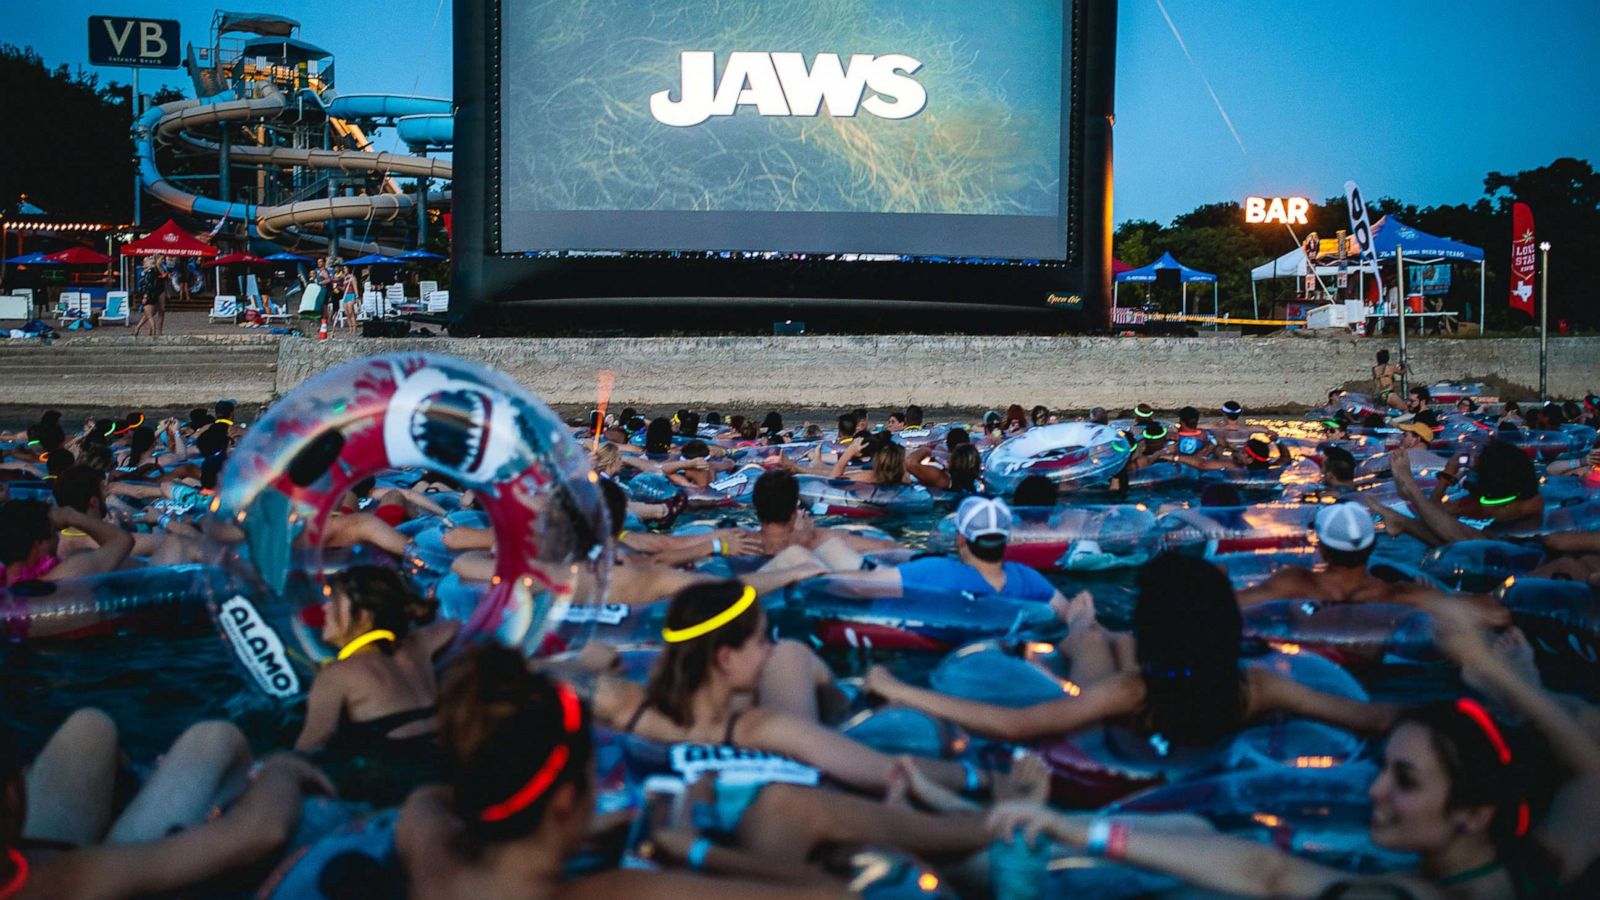 Amazon.com: Jaws : Movies & TV